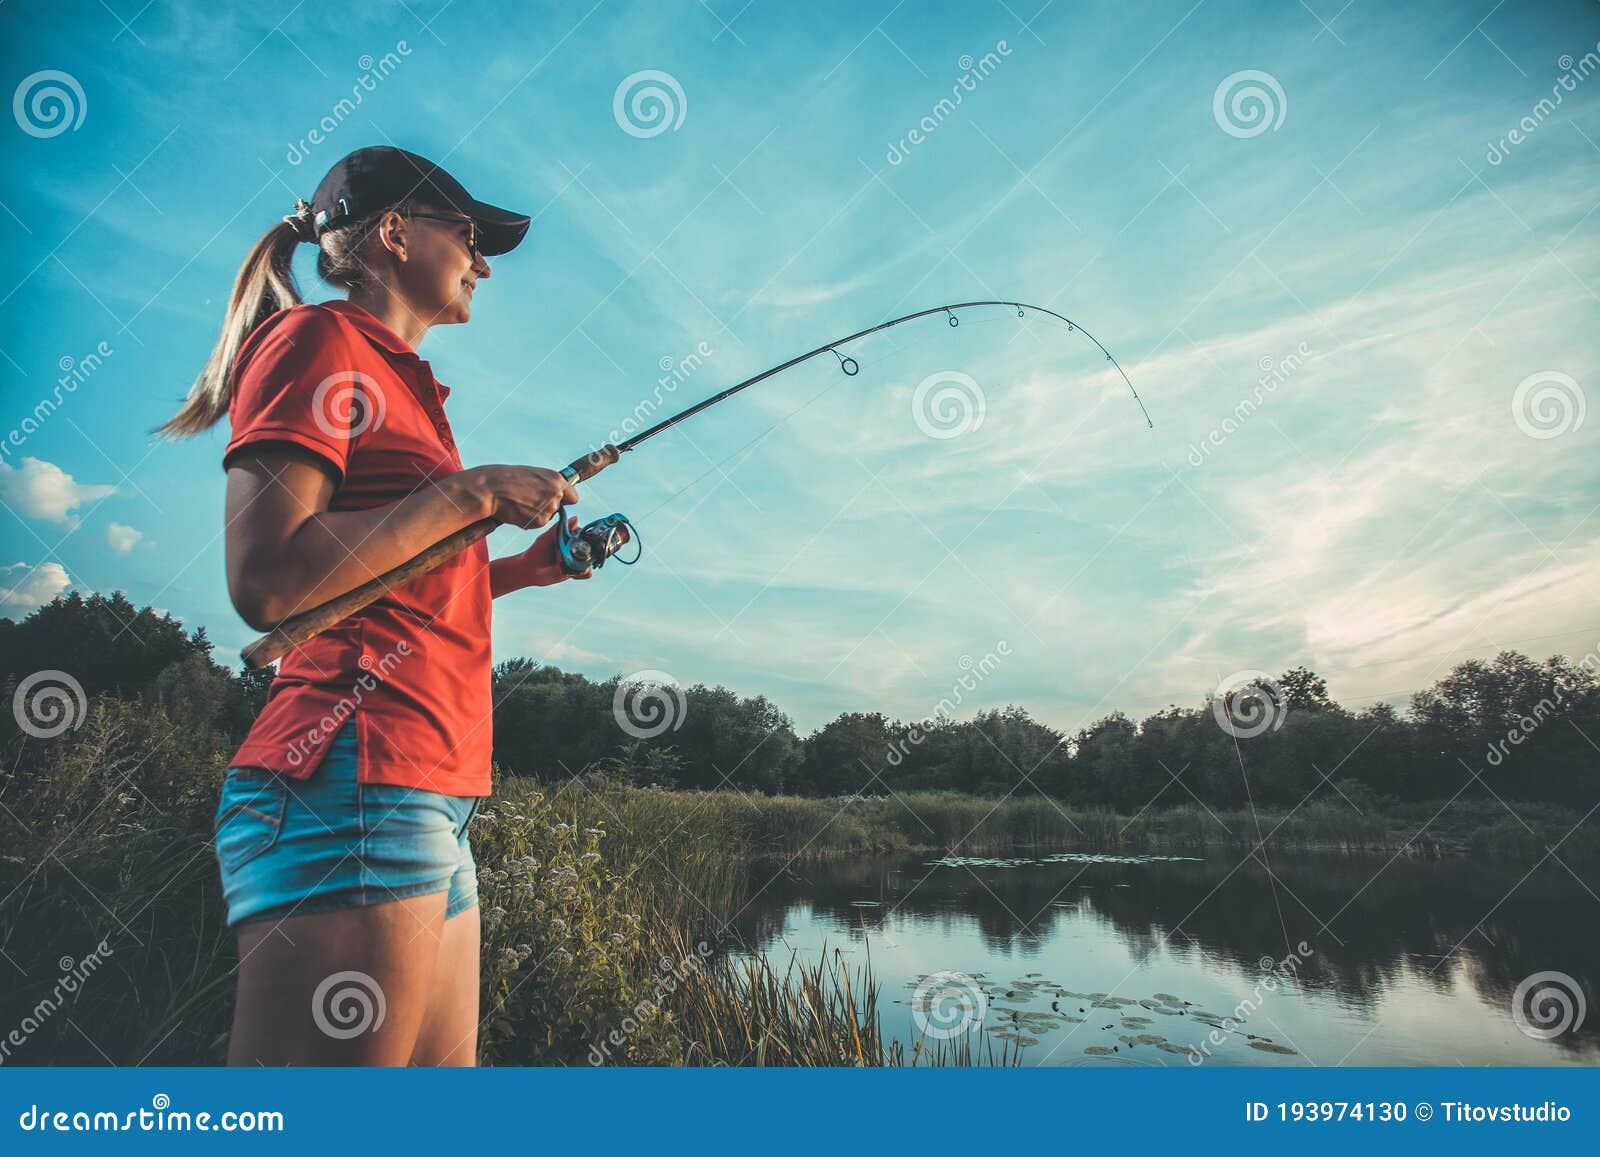 https://thumbs.dreamstime.com/z/cute-woman-fishing-rod-lake-caucasian-summer-193974130.jpg